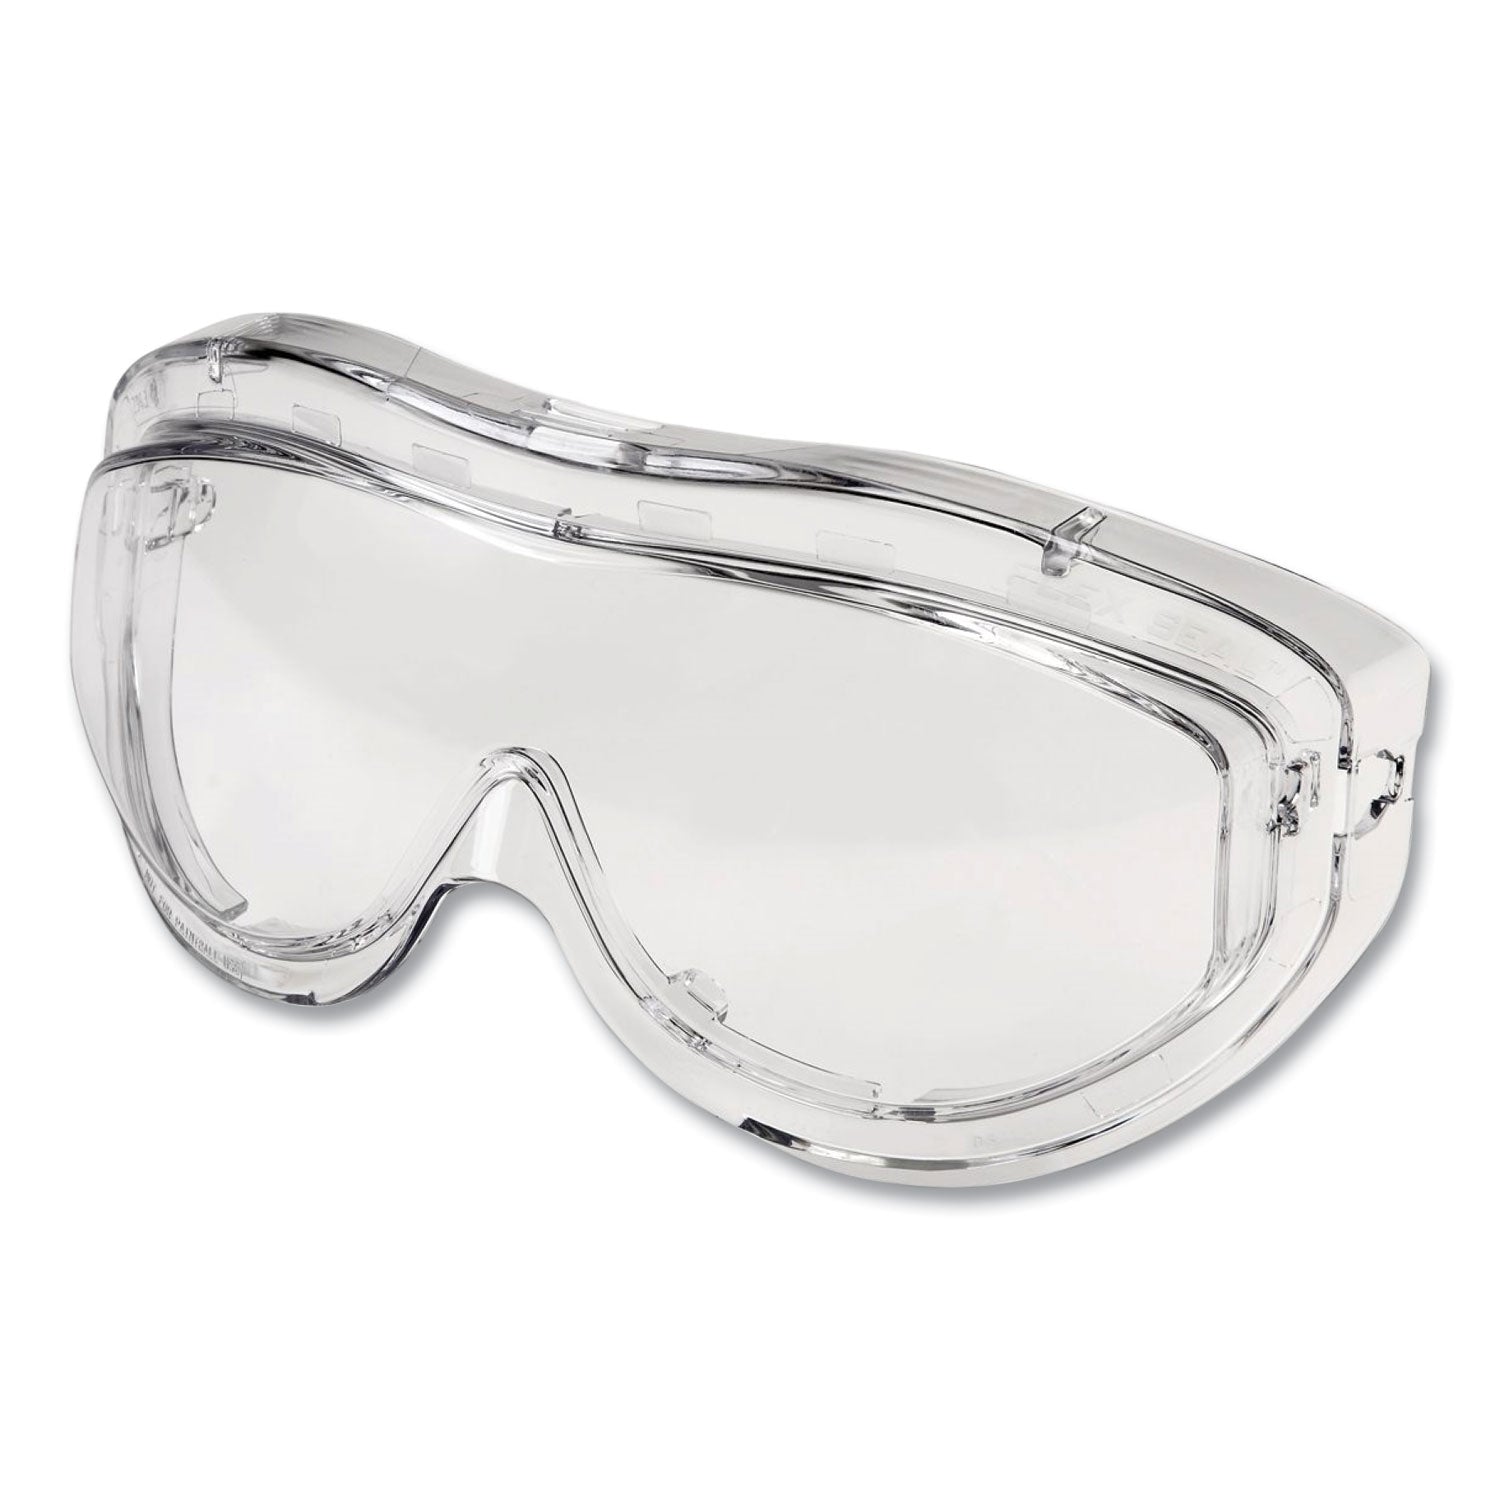 flex-seal-otg-goggles-clear-hydroshield-anti-fog-anti-scratch-lens-clear-navy-gray-frame_uvxs3400hs - 2